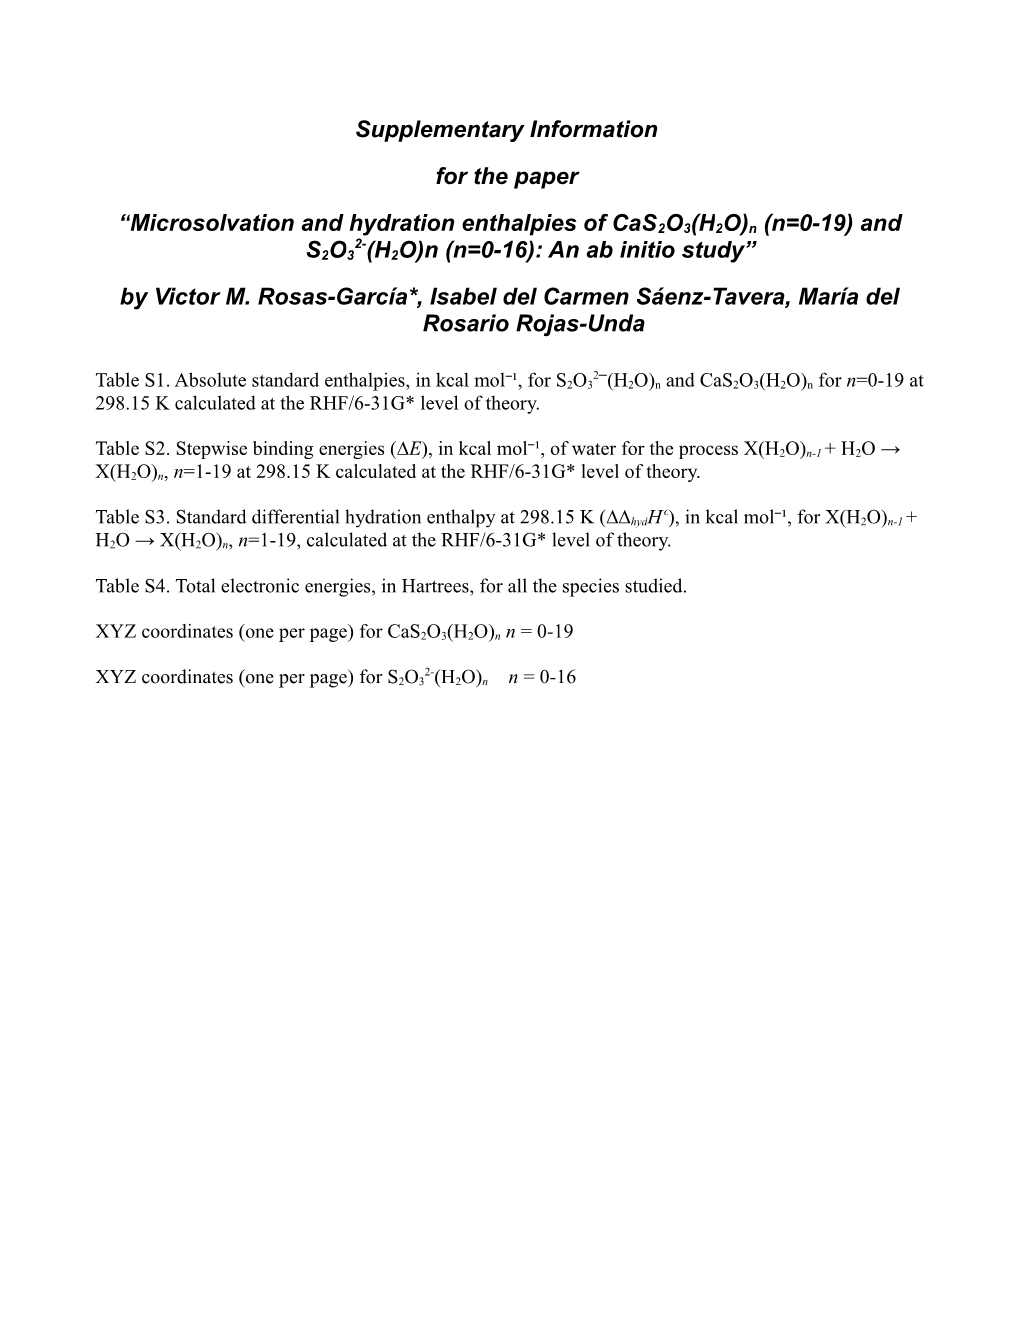 Microsolvation and Hydration Enthalpies of Cas2o3(H2O)N (N=0-19) and S2O32-(H2O)N (N=0-16)